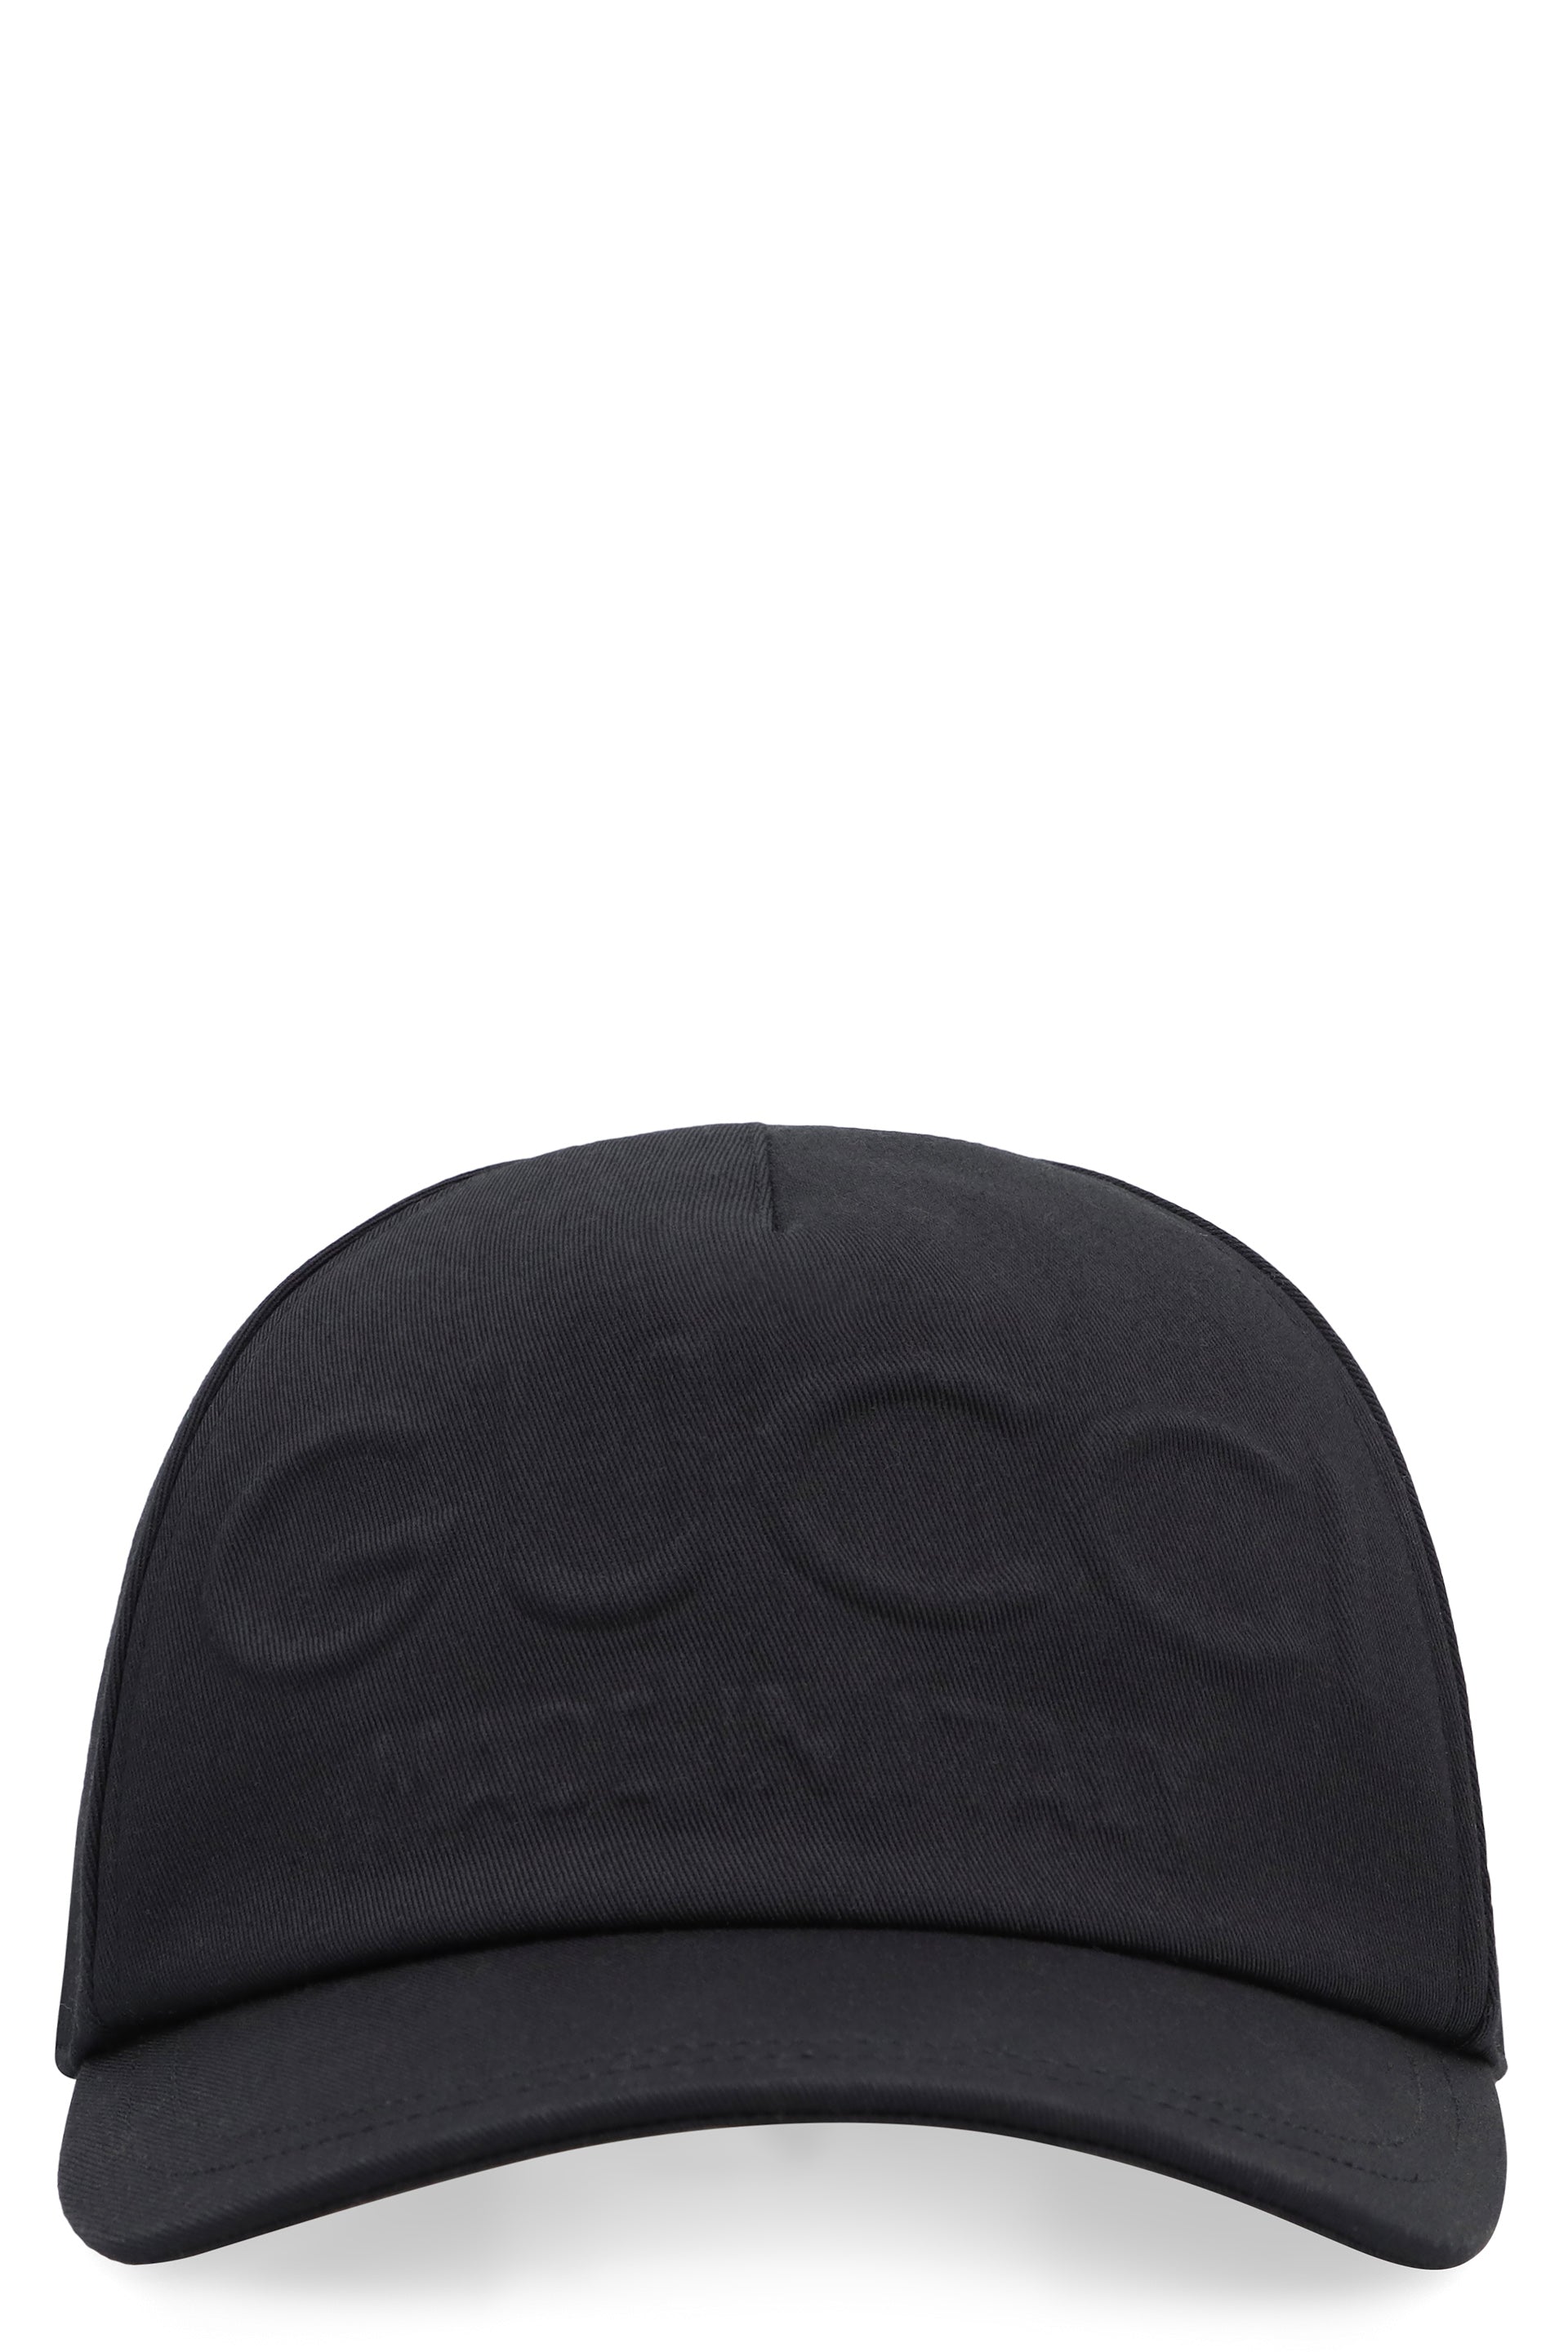 Gucci Adjustable Black Baseball Cap For Women